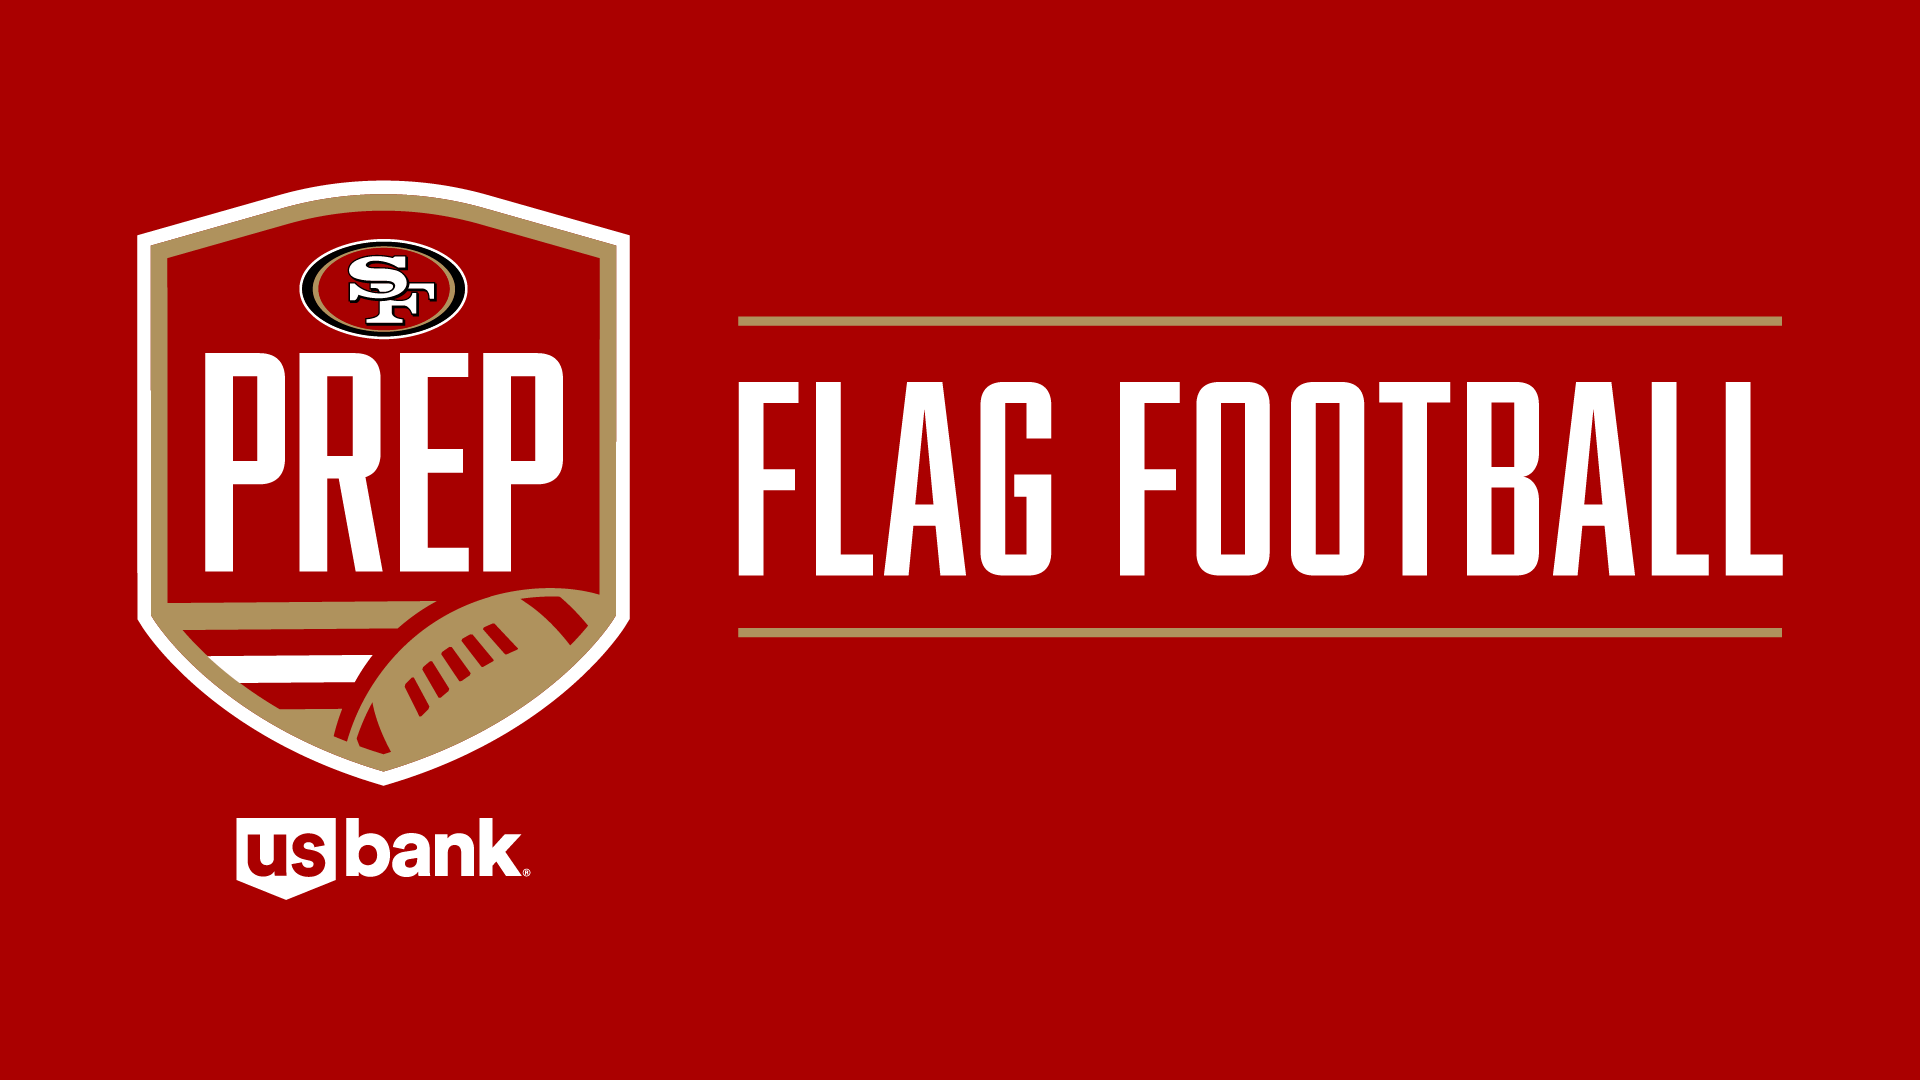 49ers football logo